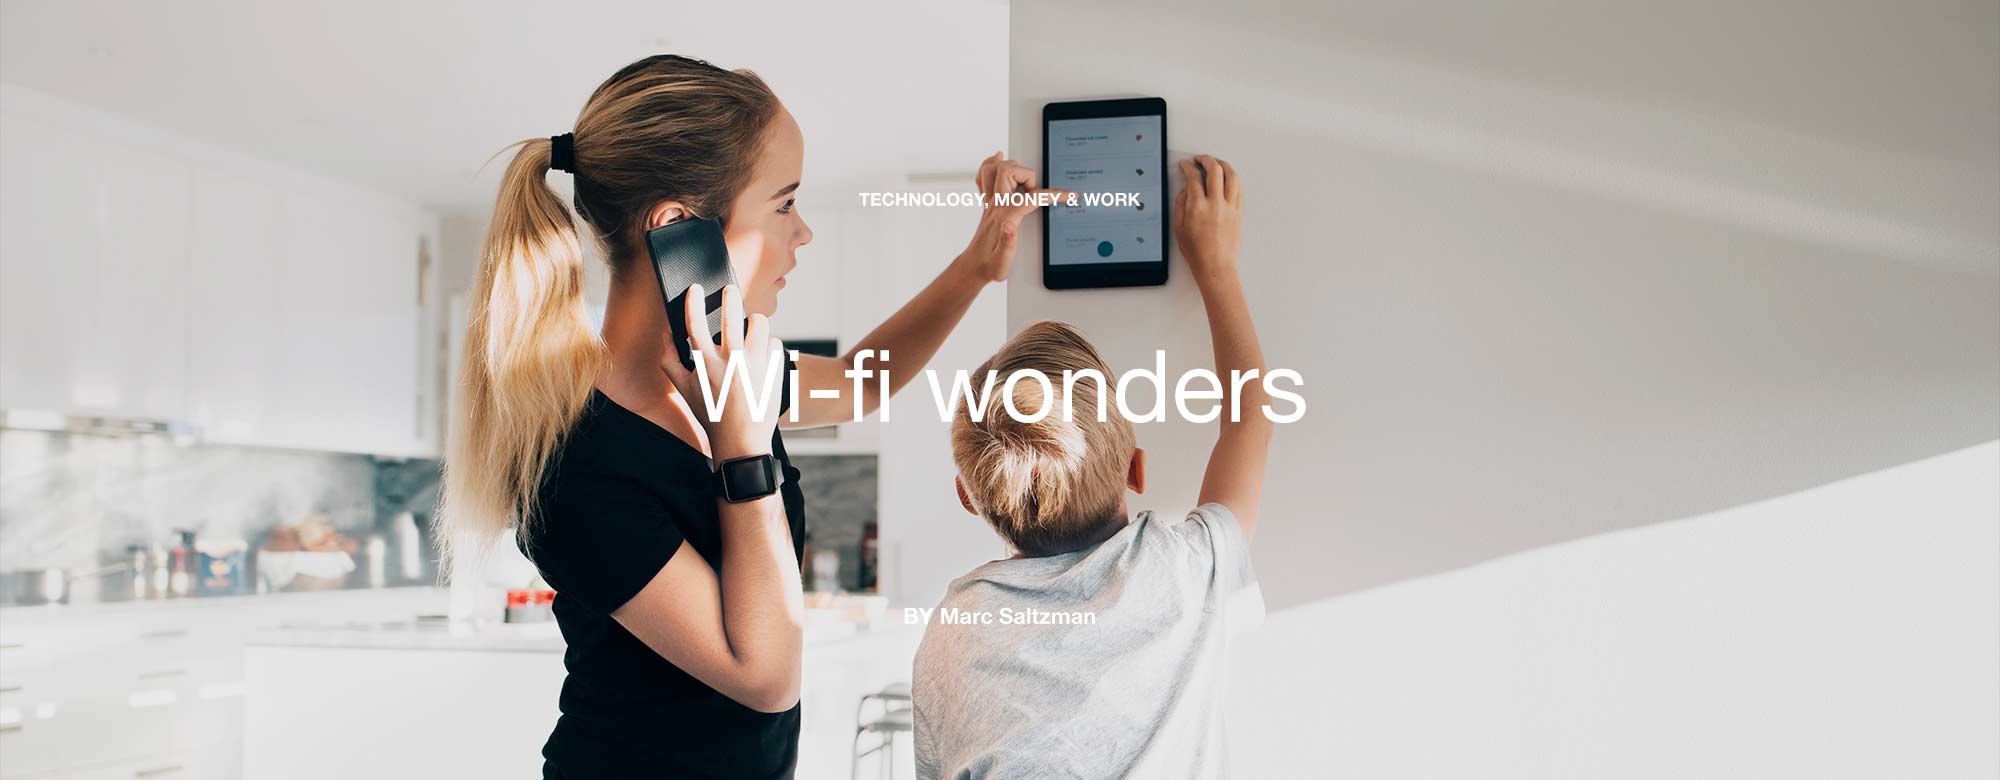 Wi-fi wonders